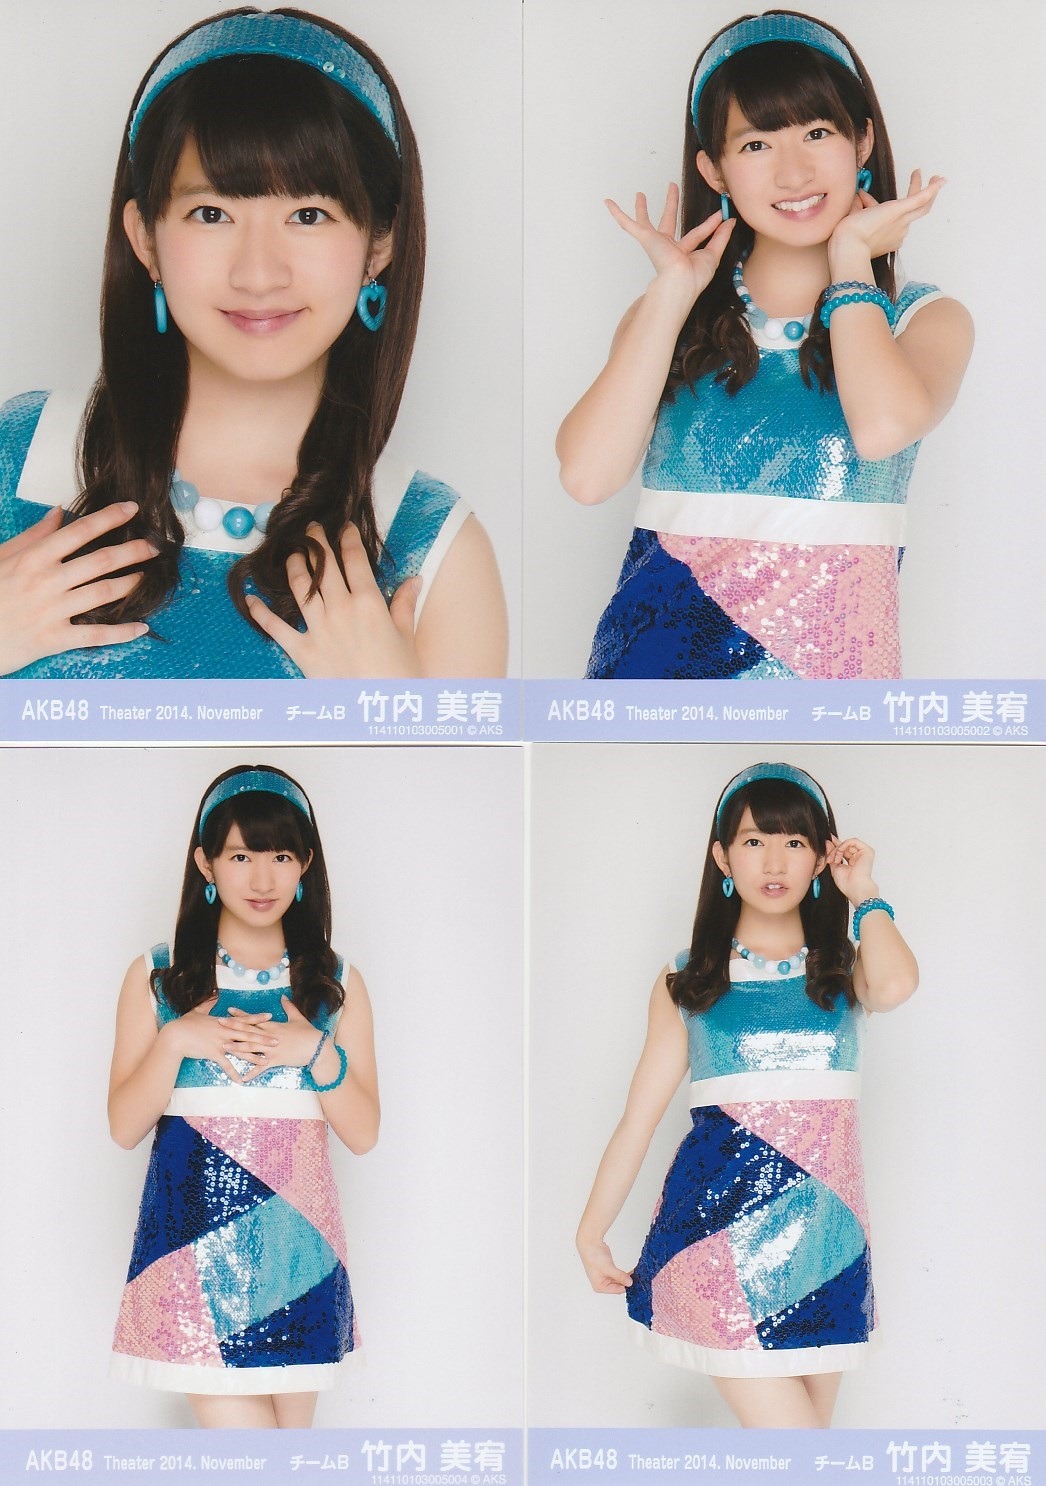 AKB48 Theater Photos | November 2014